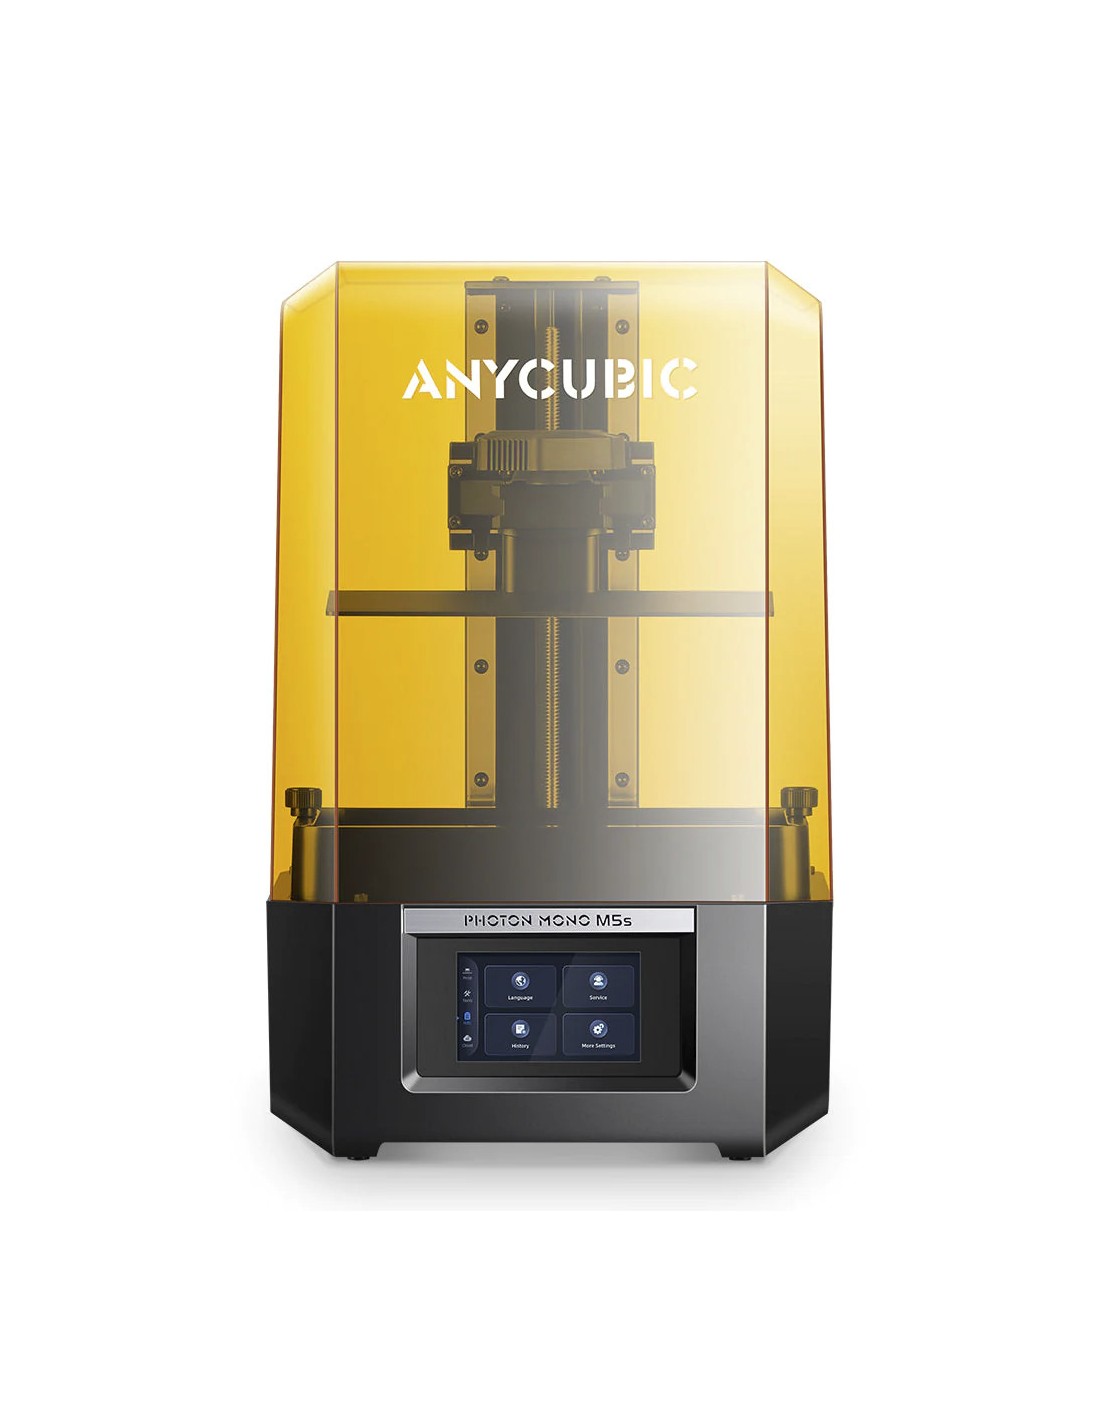 Anycubic Photon Mono M5s - impressora 3D de resina